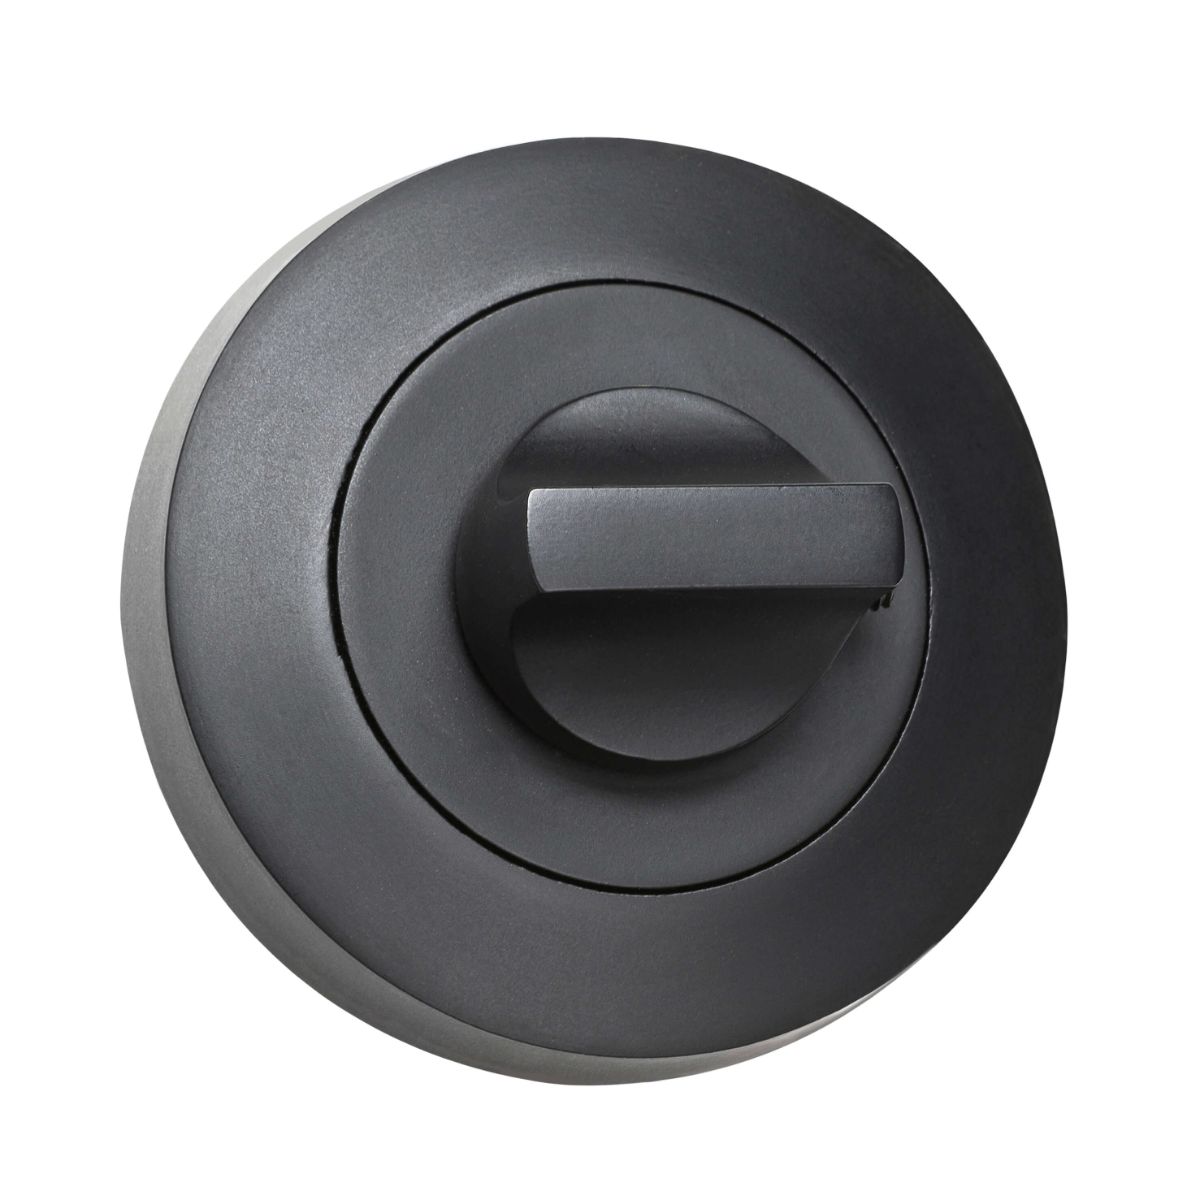 Lemaar 53mm Round Turn Button Escutcheon - Black door hardware